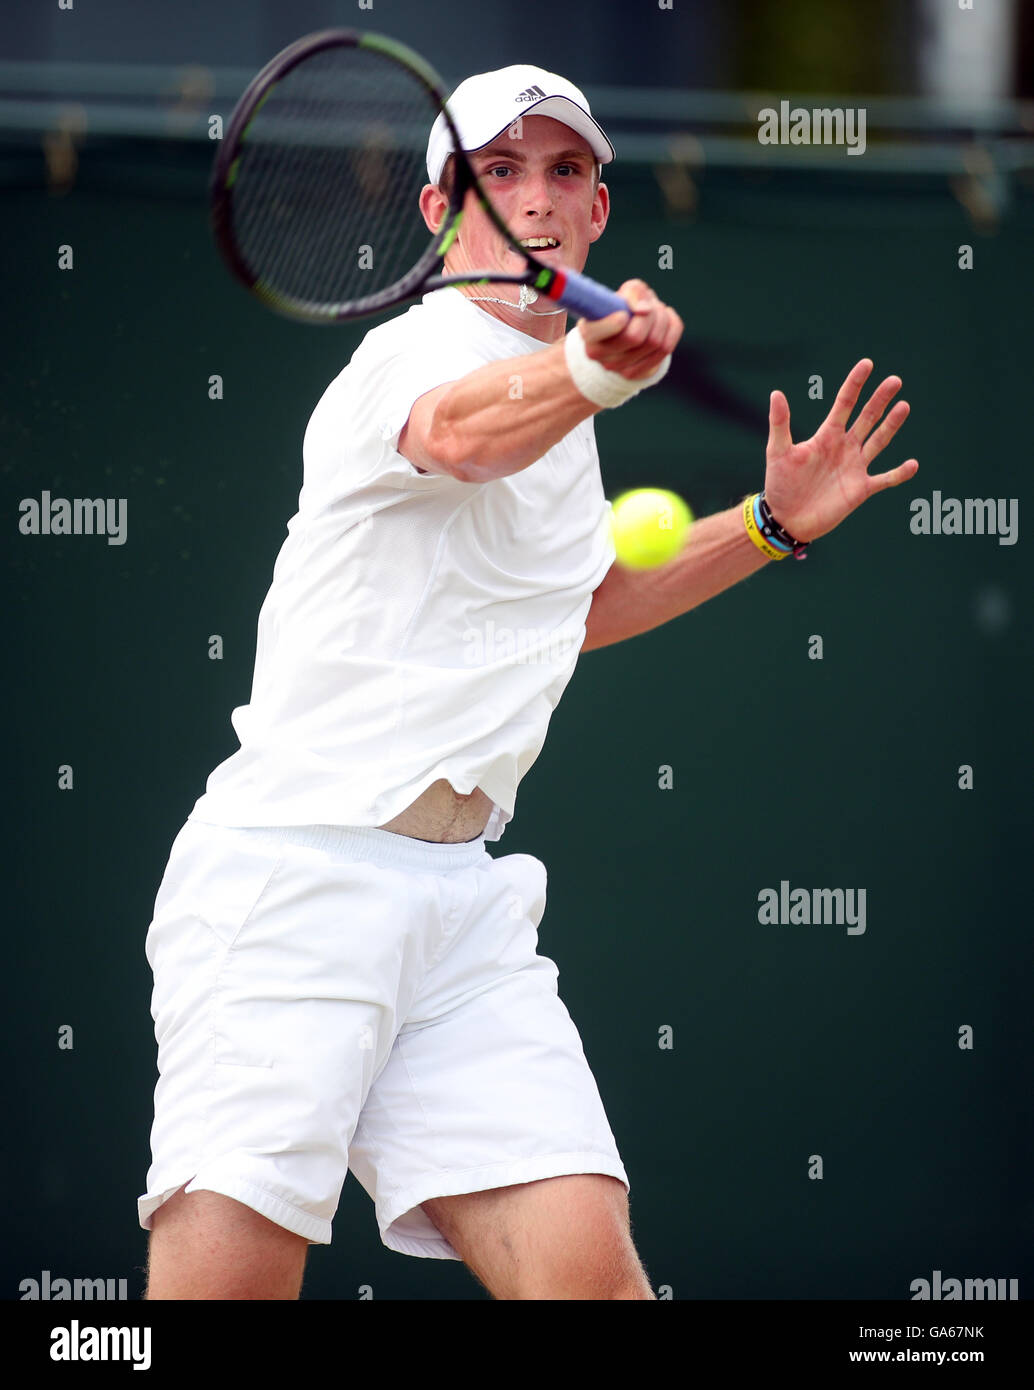 Luke Hammond in Aktion gegen Dan Added am Tag sieben der Wimbledon  Championships bei den All England Lawn Tennis and Croquet Club, Wimbledon  Stockfotografie - Alamy